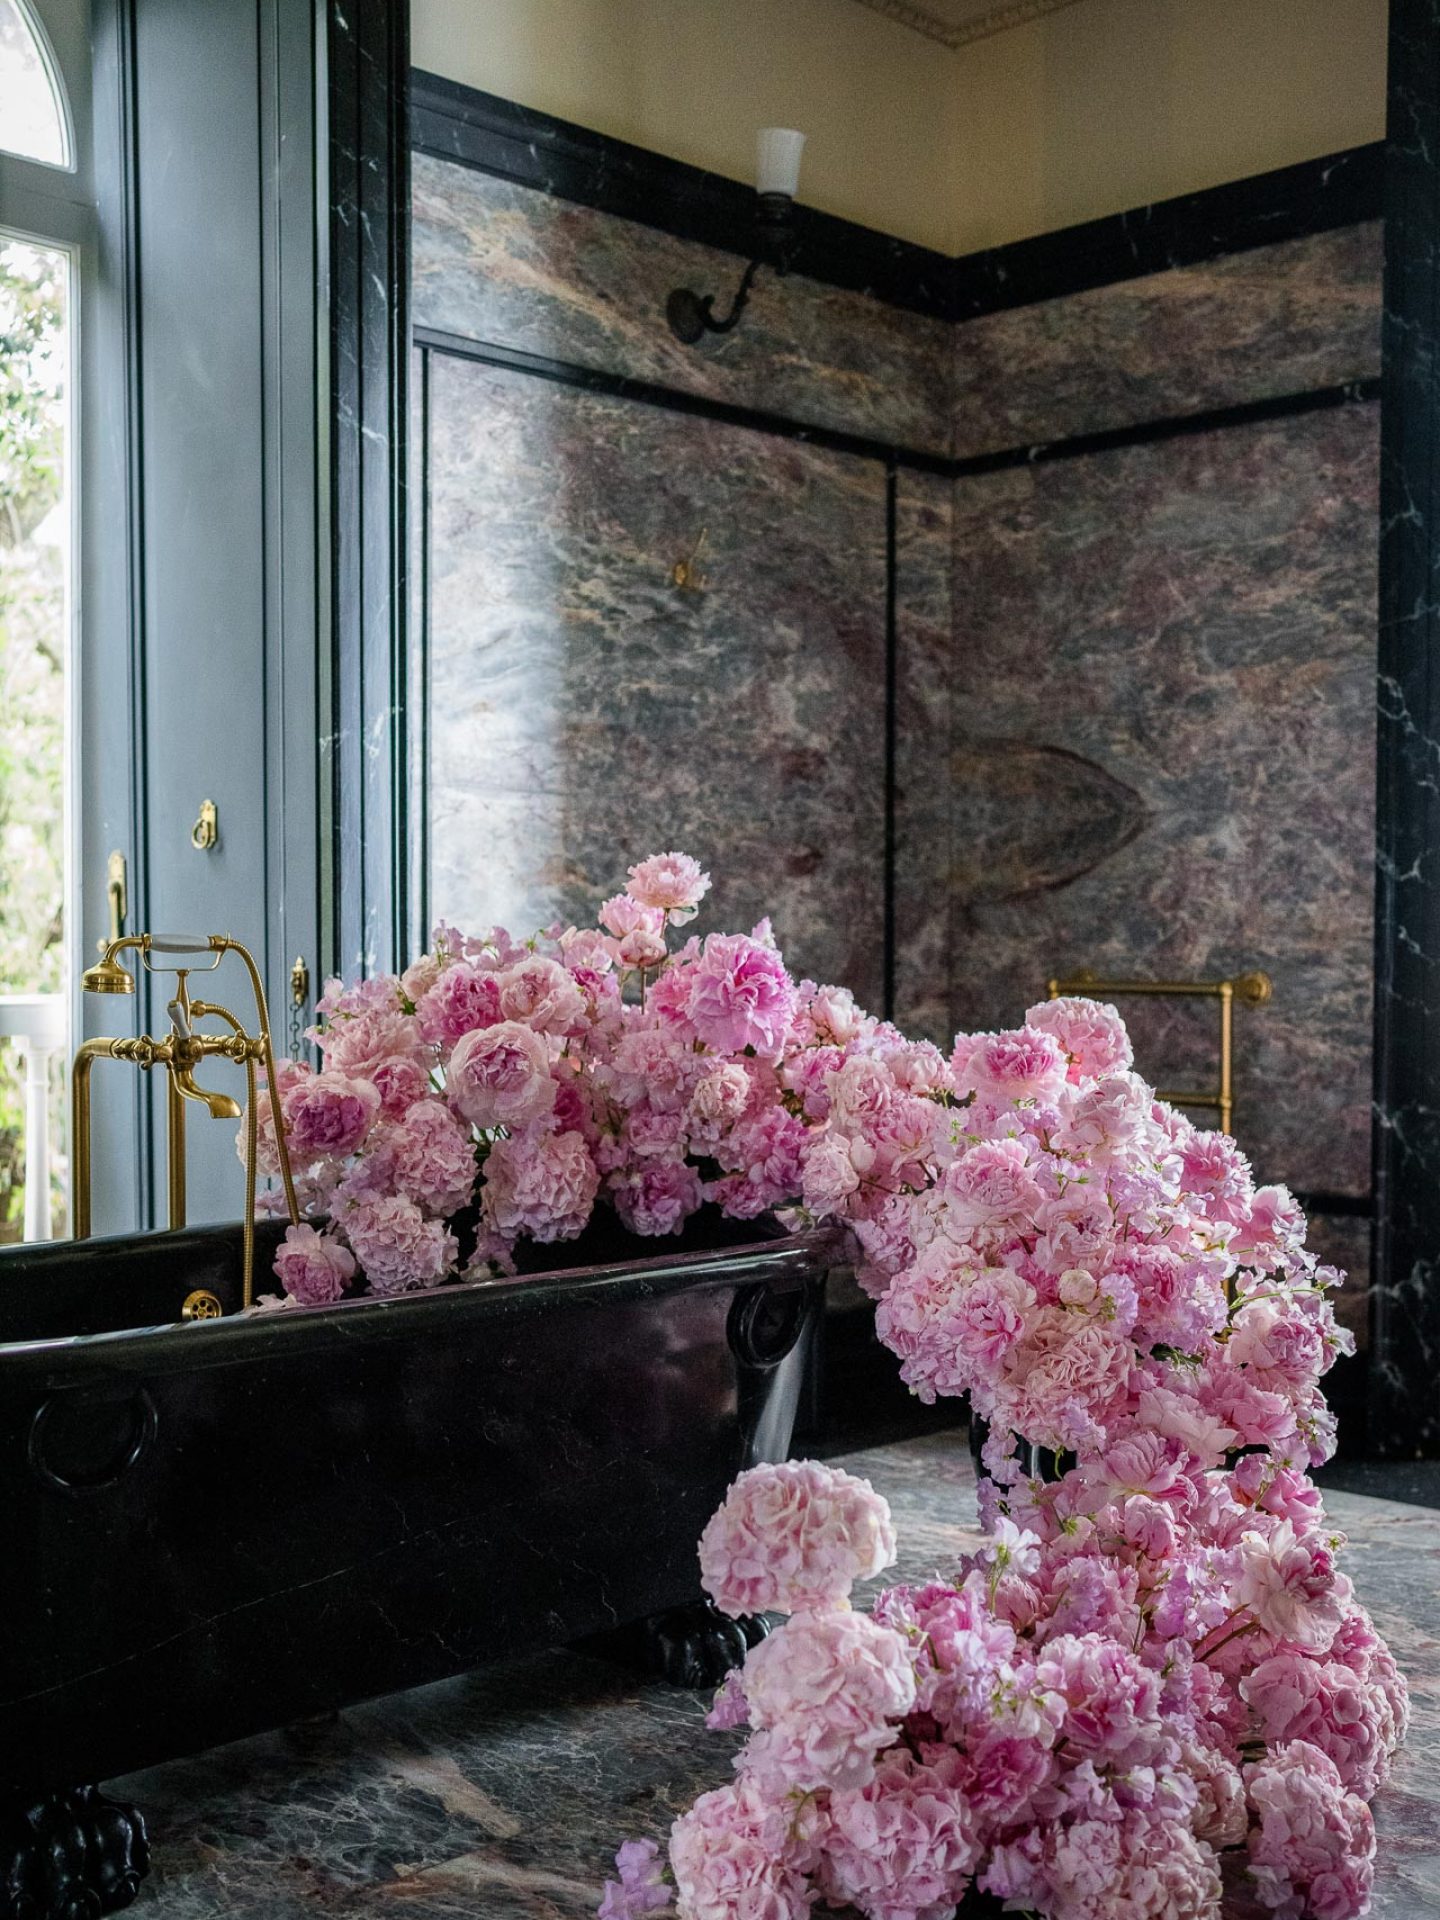 Villa Astor - Bath and flower photography